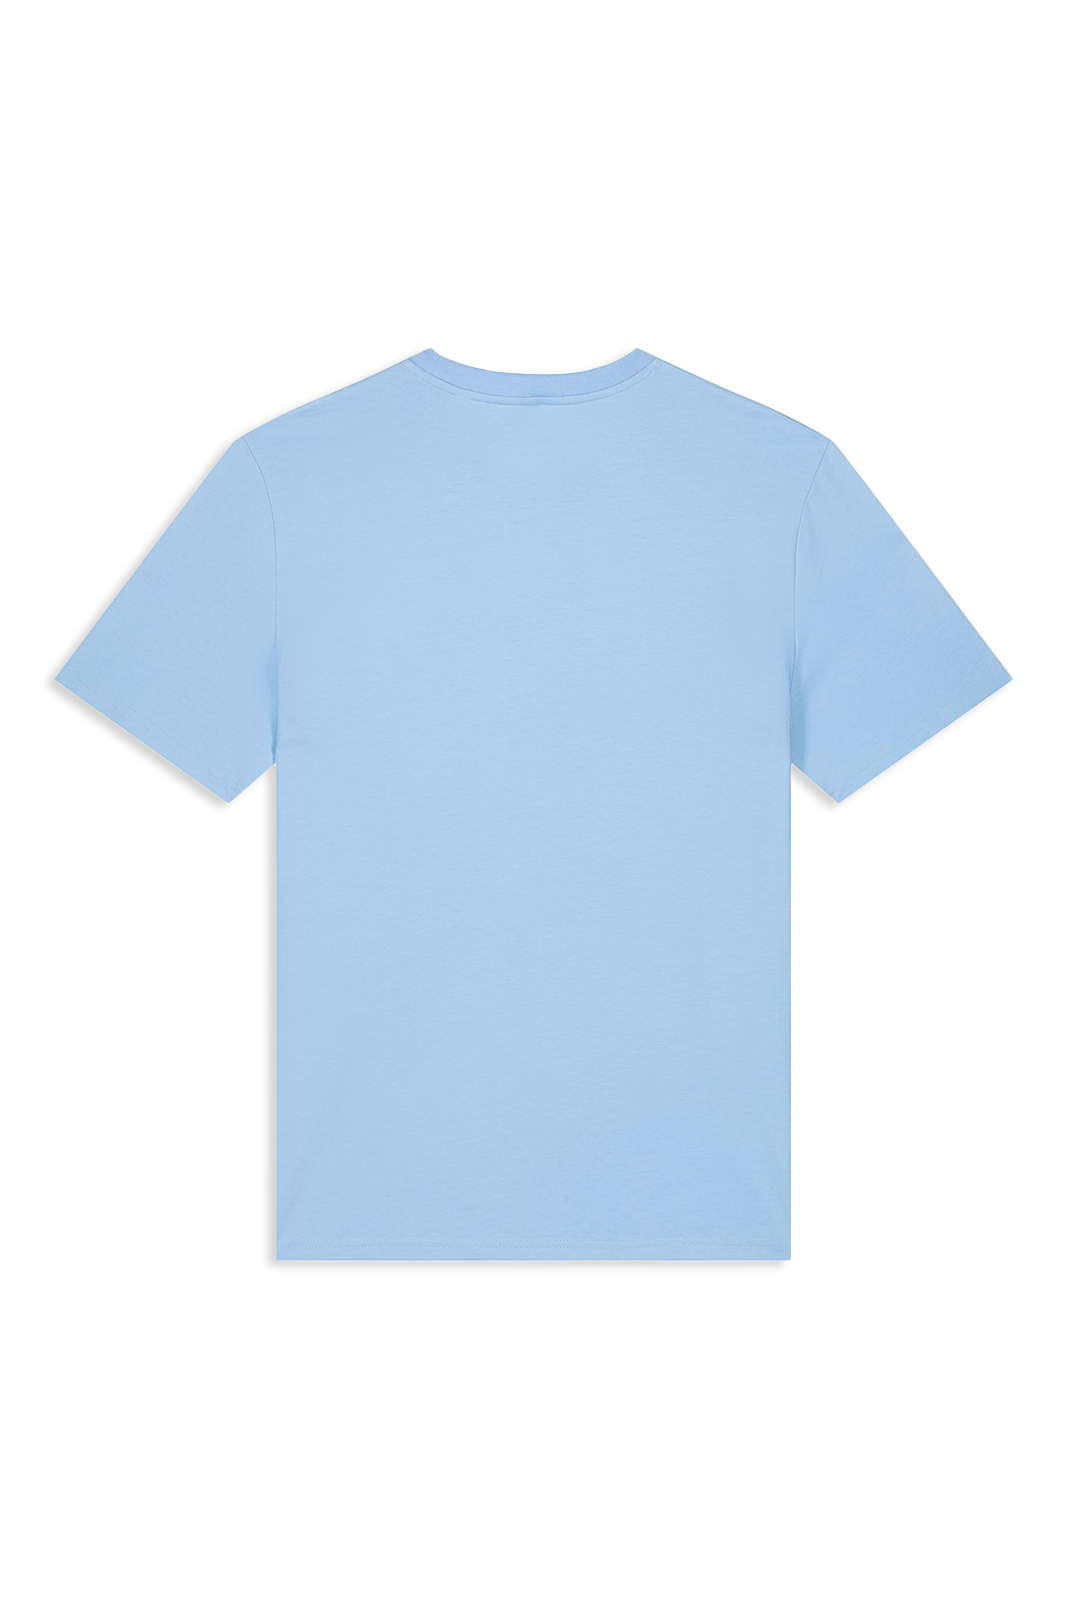 T-Shirt - Lurchworld (Blue)